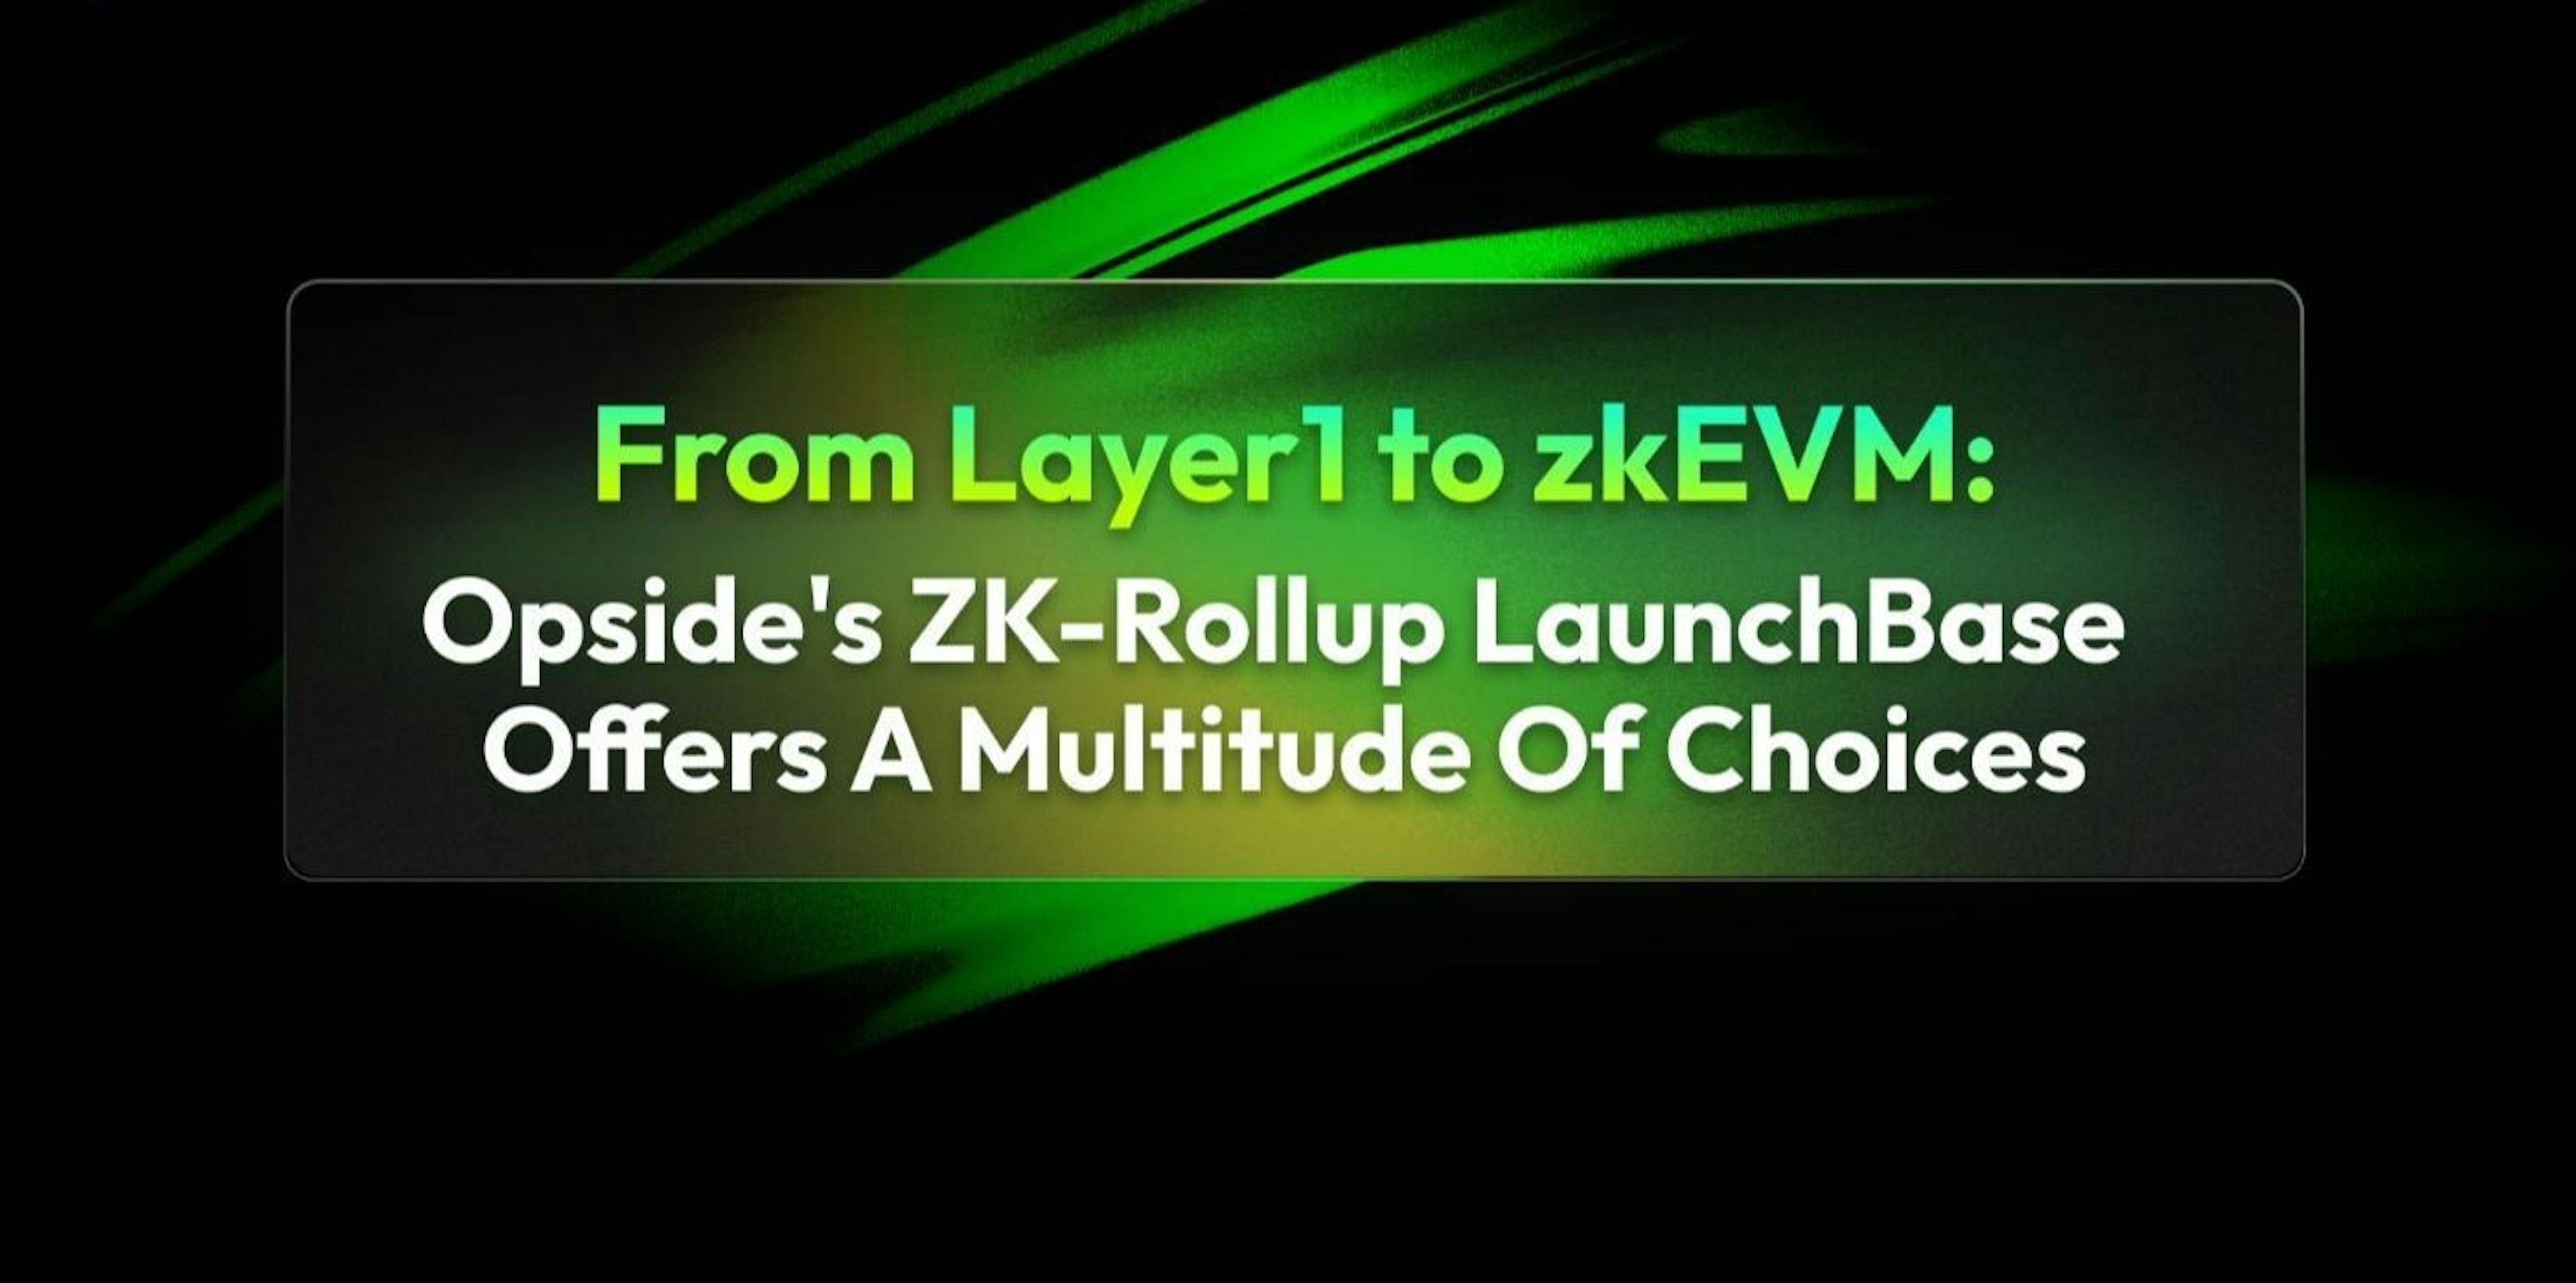 featured image - Từ Layer1 đến zkEVM: LaunchBase ZK-Rollup của Opside đang cung cấp rất nhiều lựa chọn